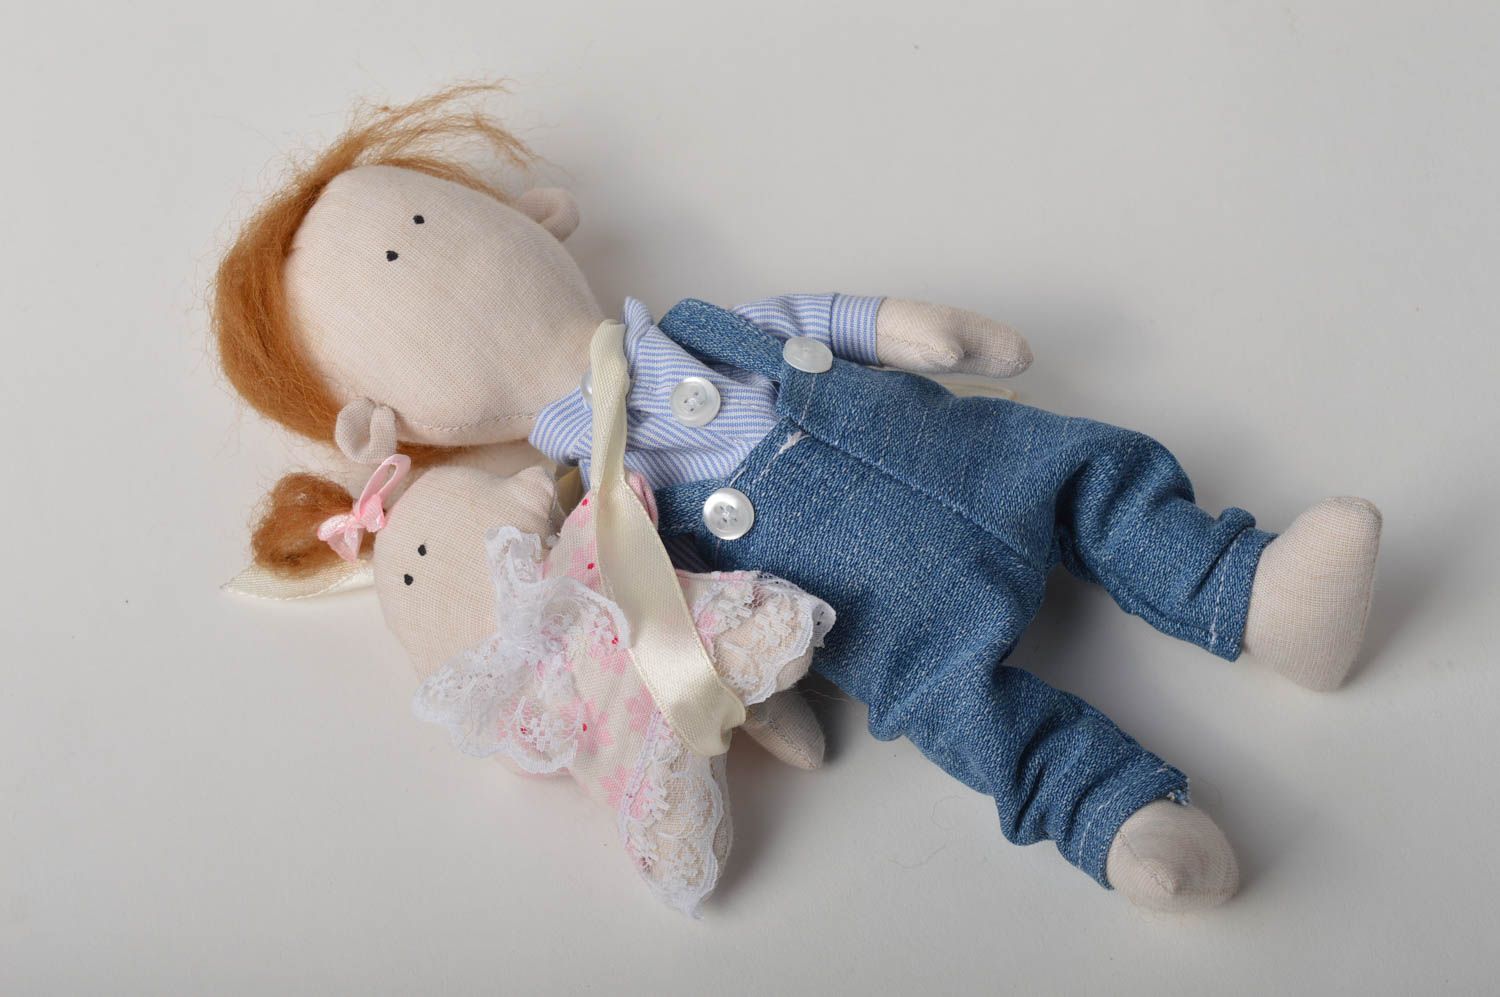 Handmade doll designer doll for baby unusual gift for baby nursery decor photo 2